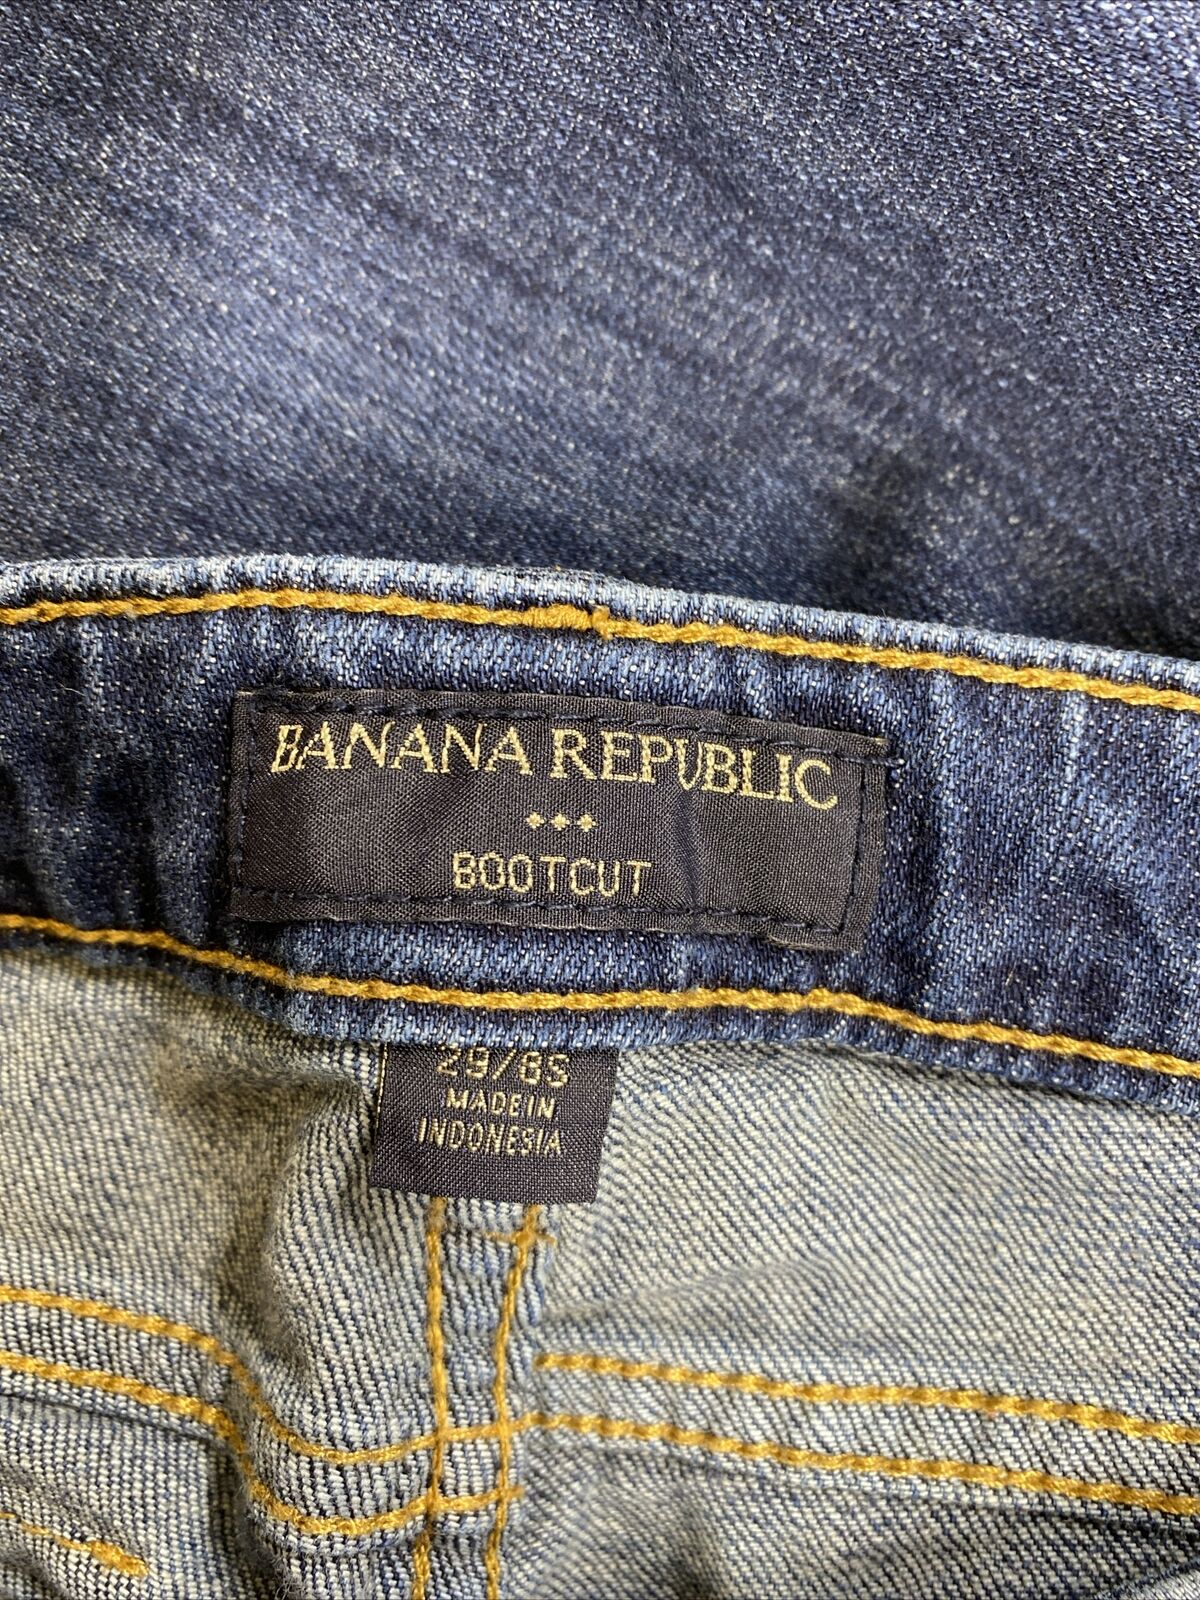 Banana Republic Women's Dark Wash Boot Cut Jeans - 29/8 Short